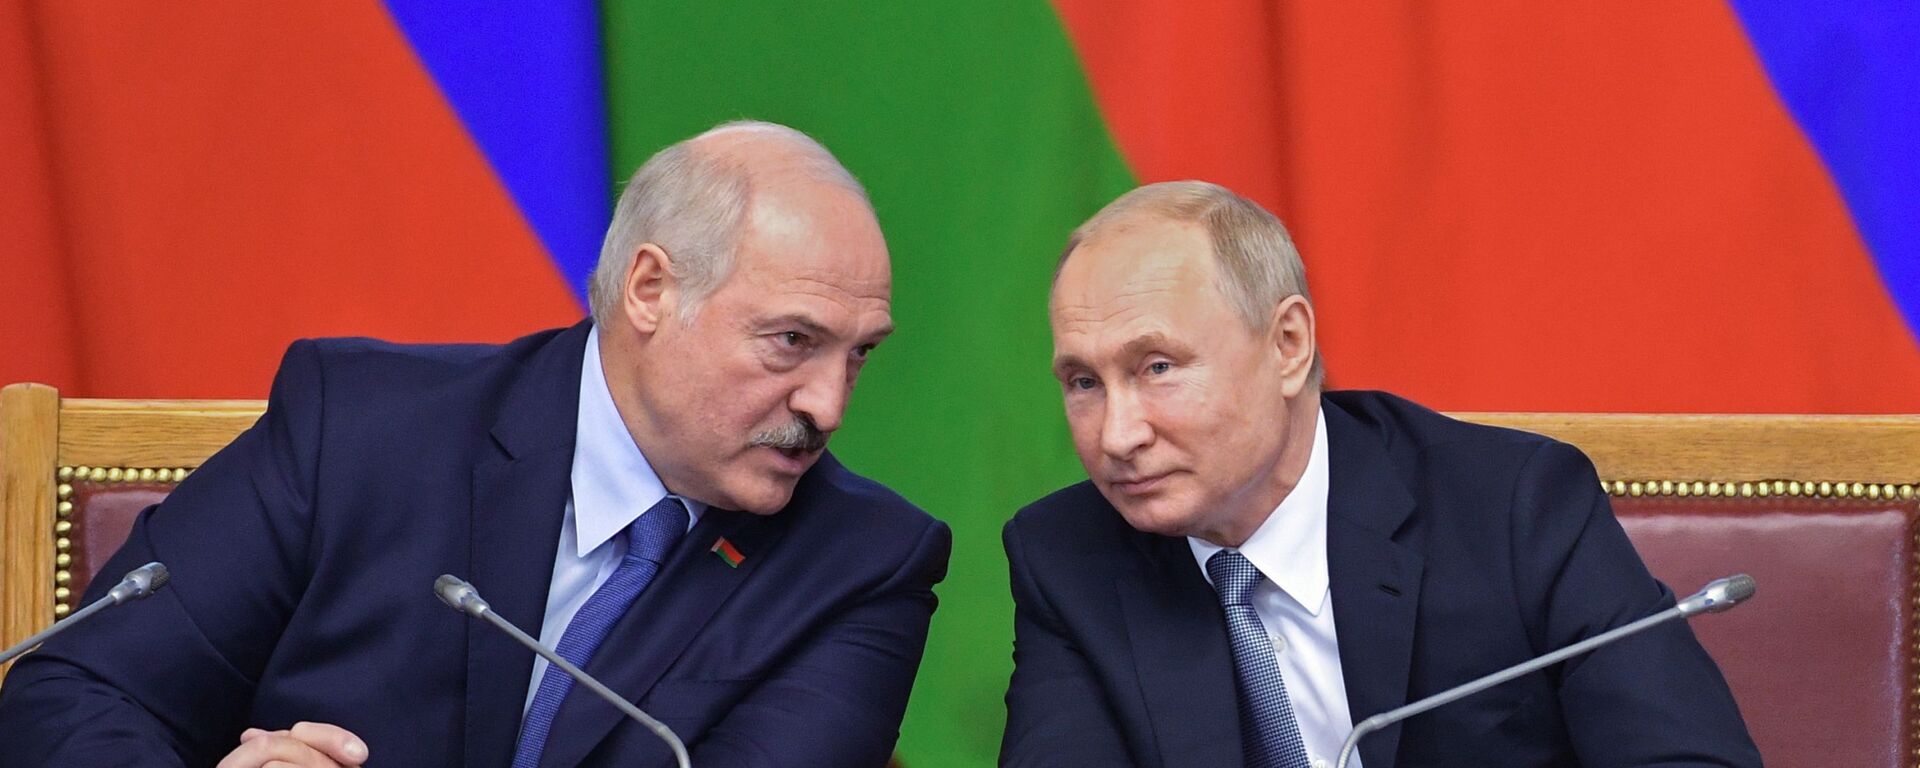 Президент РФ Владимир Путин и президент Белоруссии Александр Лукашенко - Sputnik Таджикистан, 1920, 09.09.2021